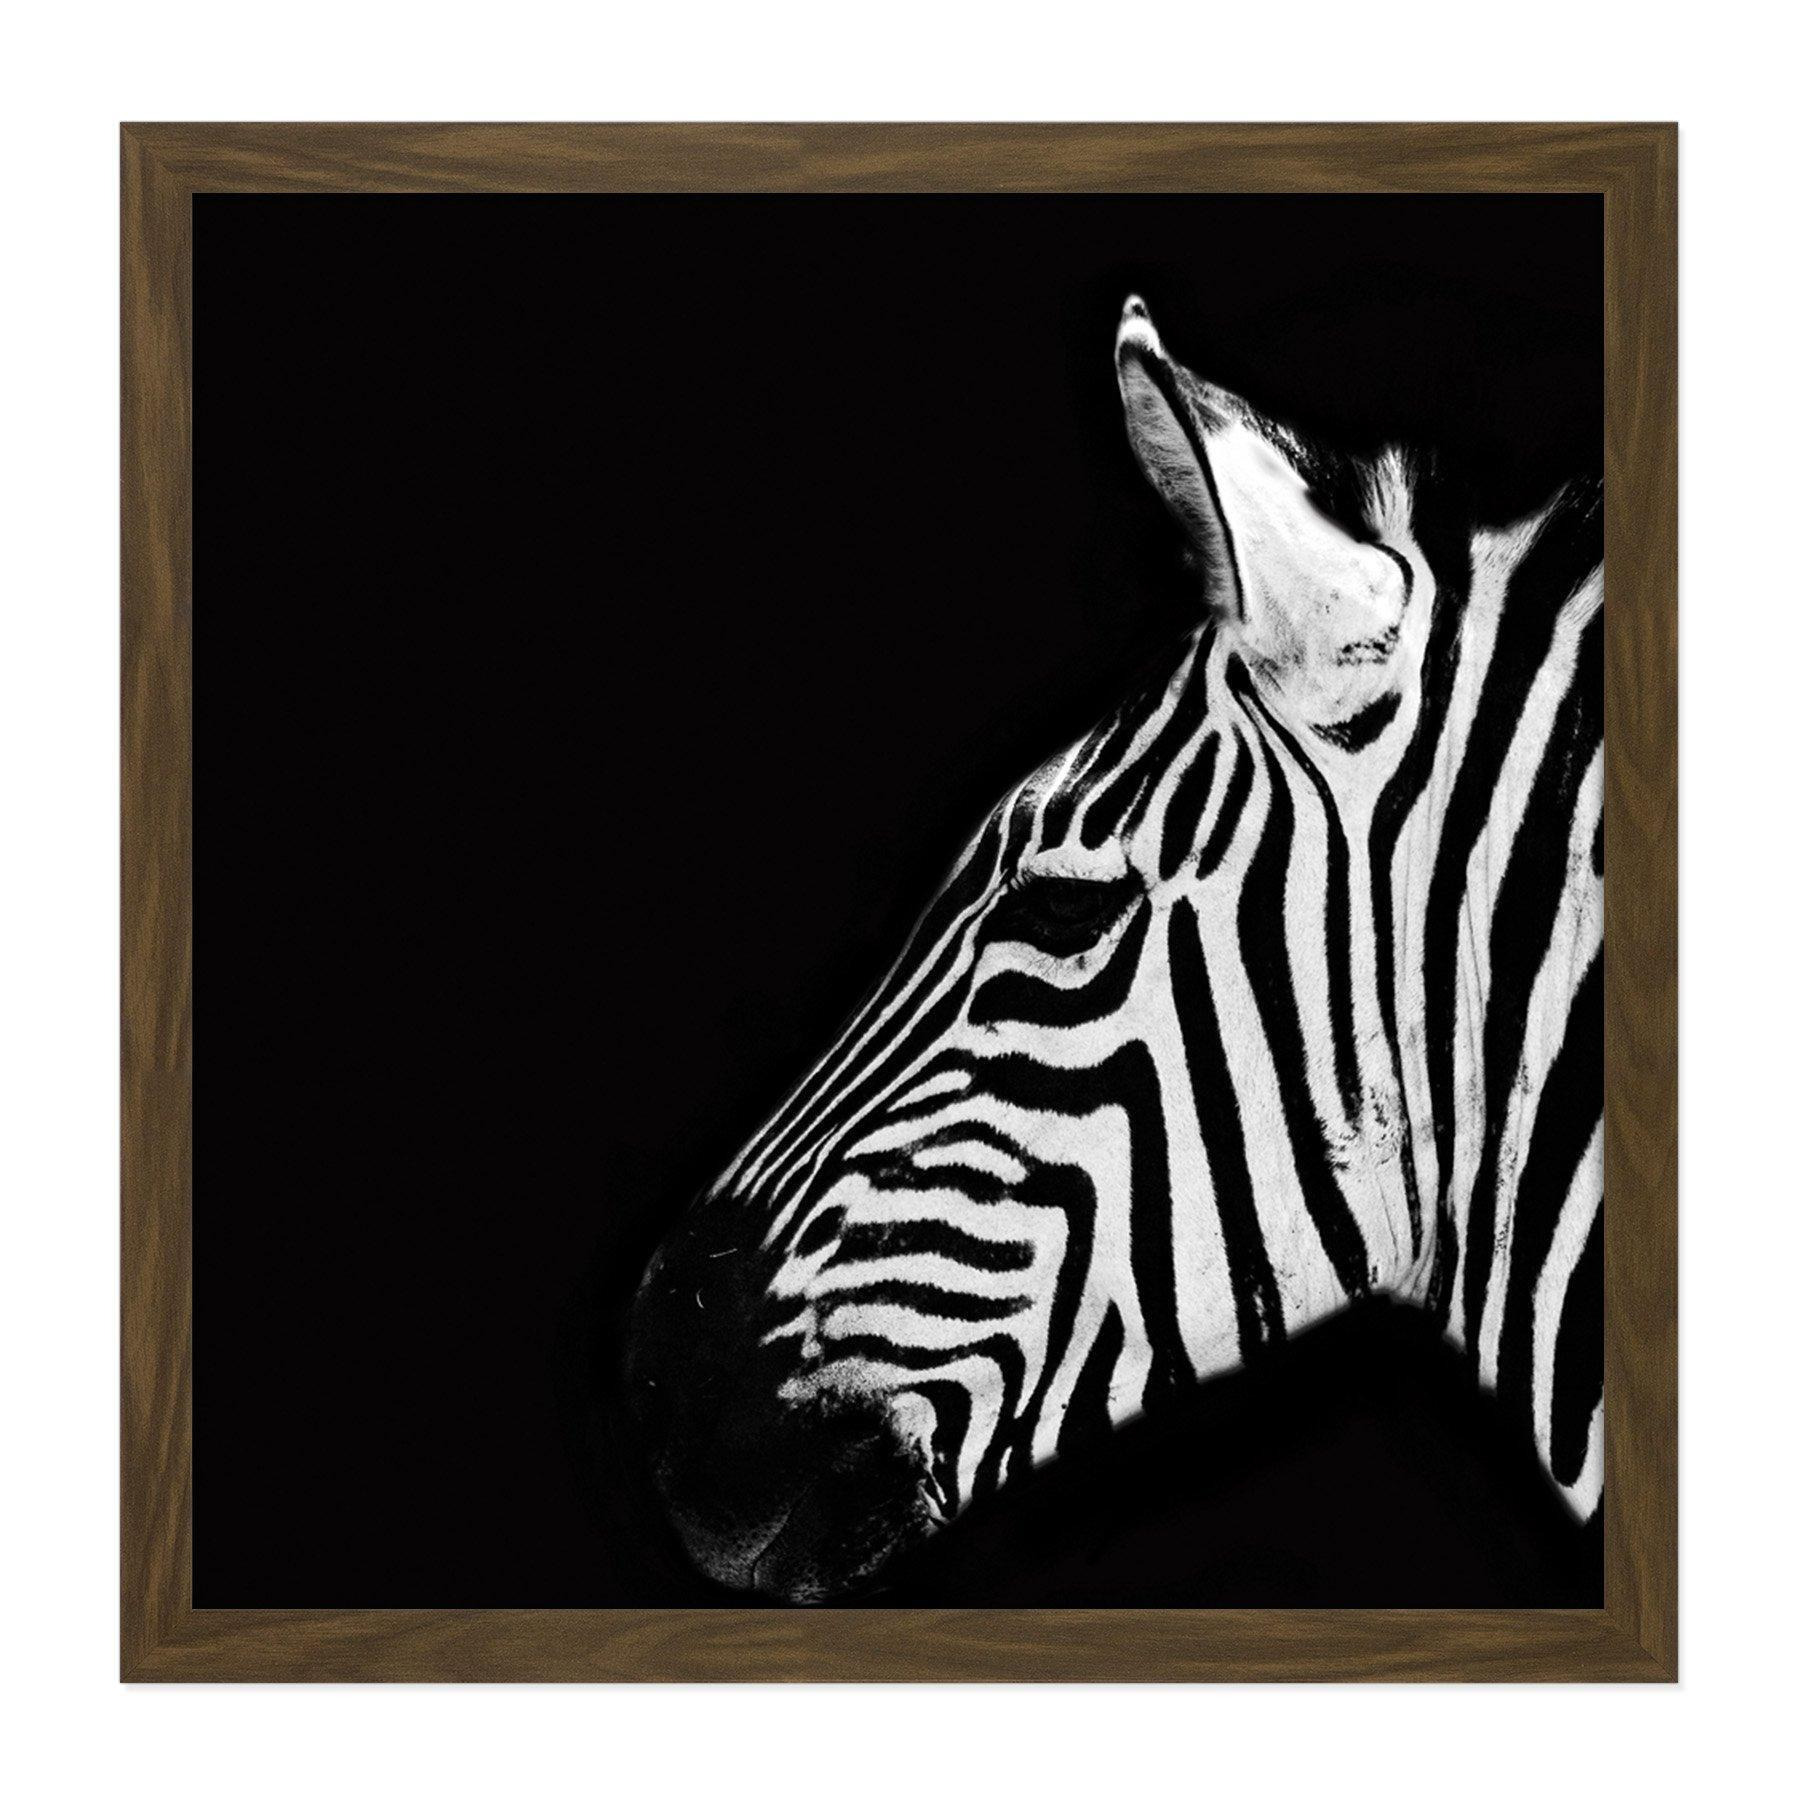 Zebra Head Animal Black White Photo Square Framed Wall Art Print Picture 16X16 Inch - image 1